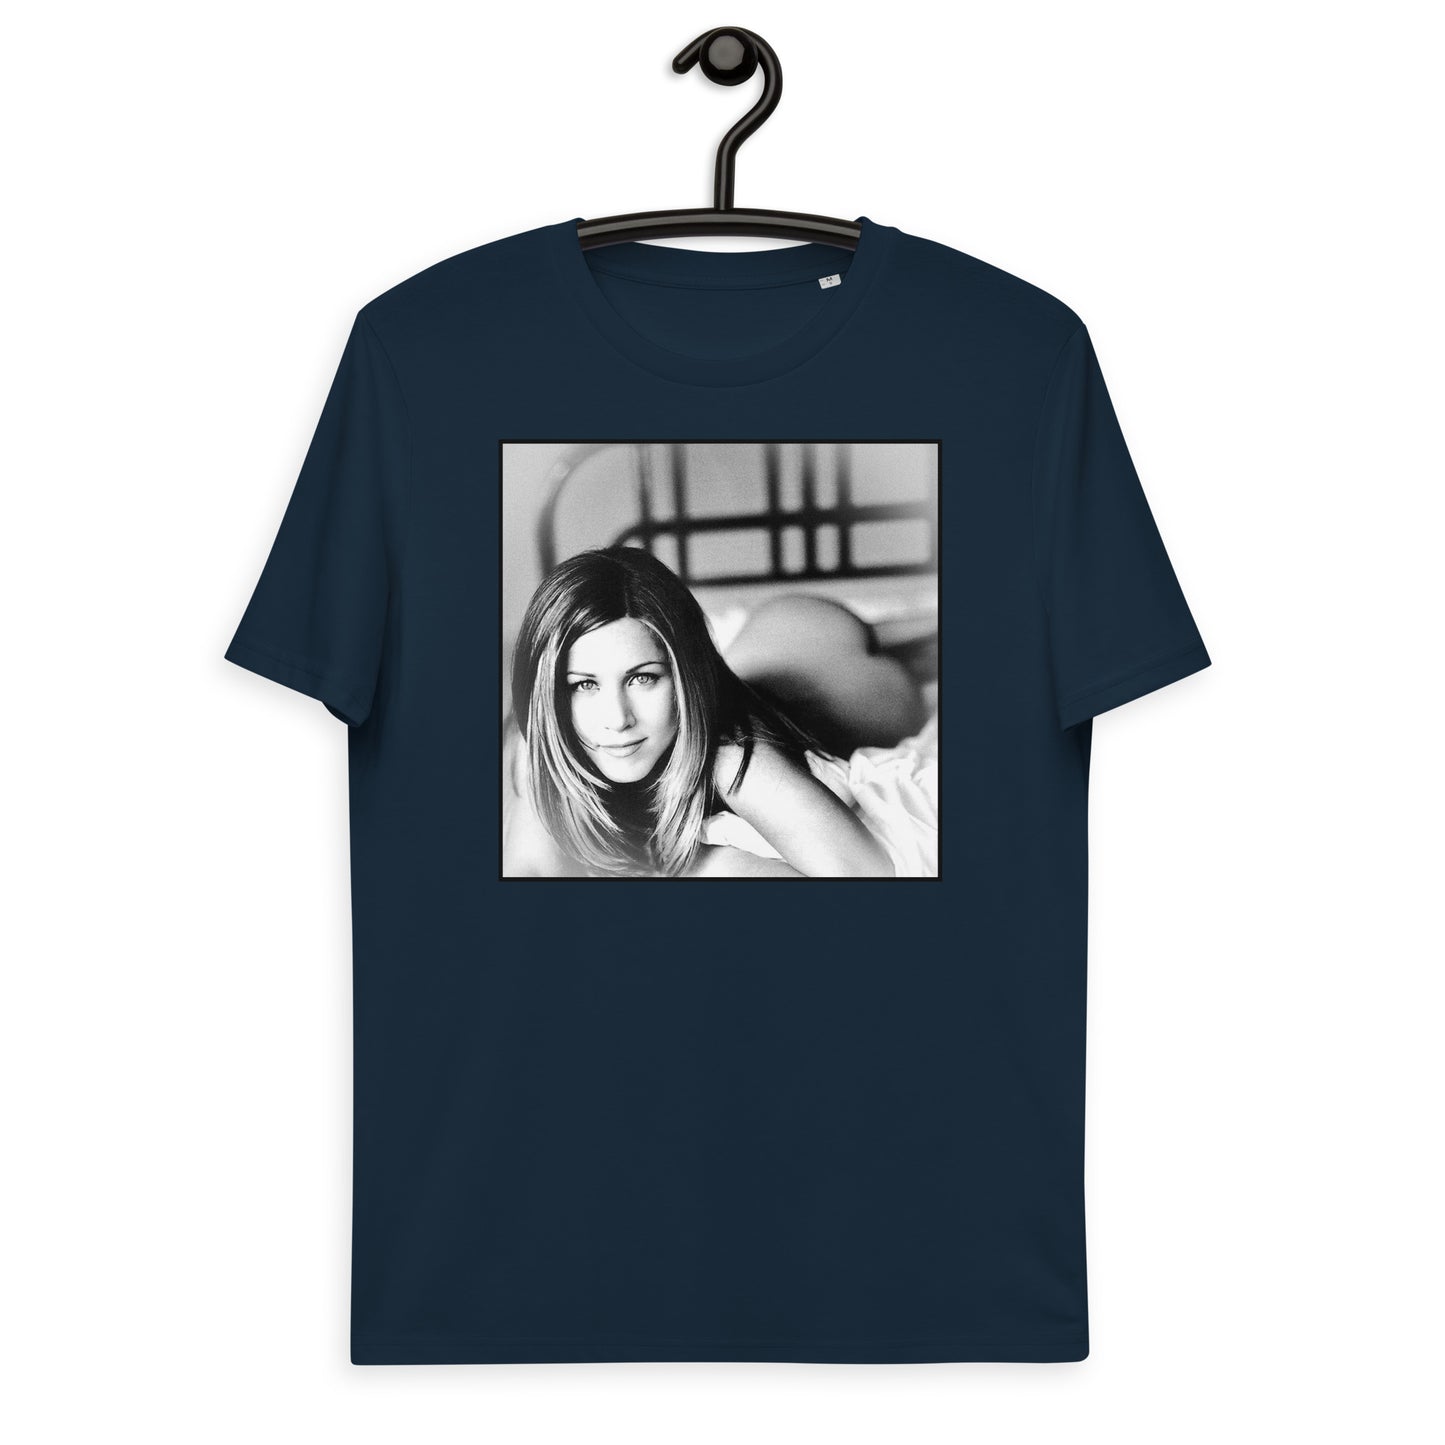 Jennifer Nude KiSS Unisex organic cotton t-shirt - Friends Rachel Green Aniston